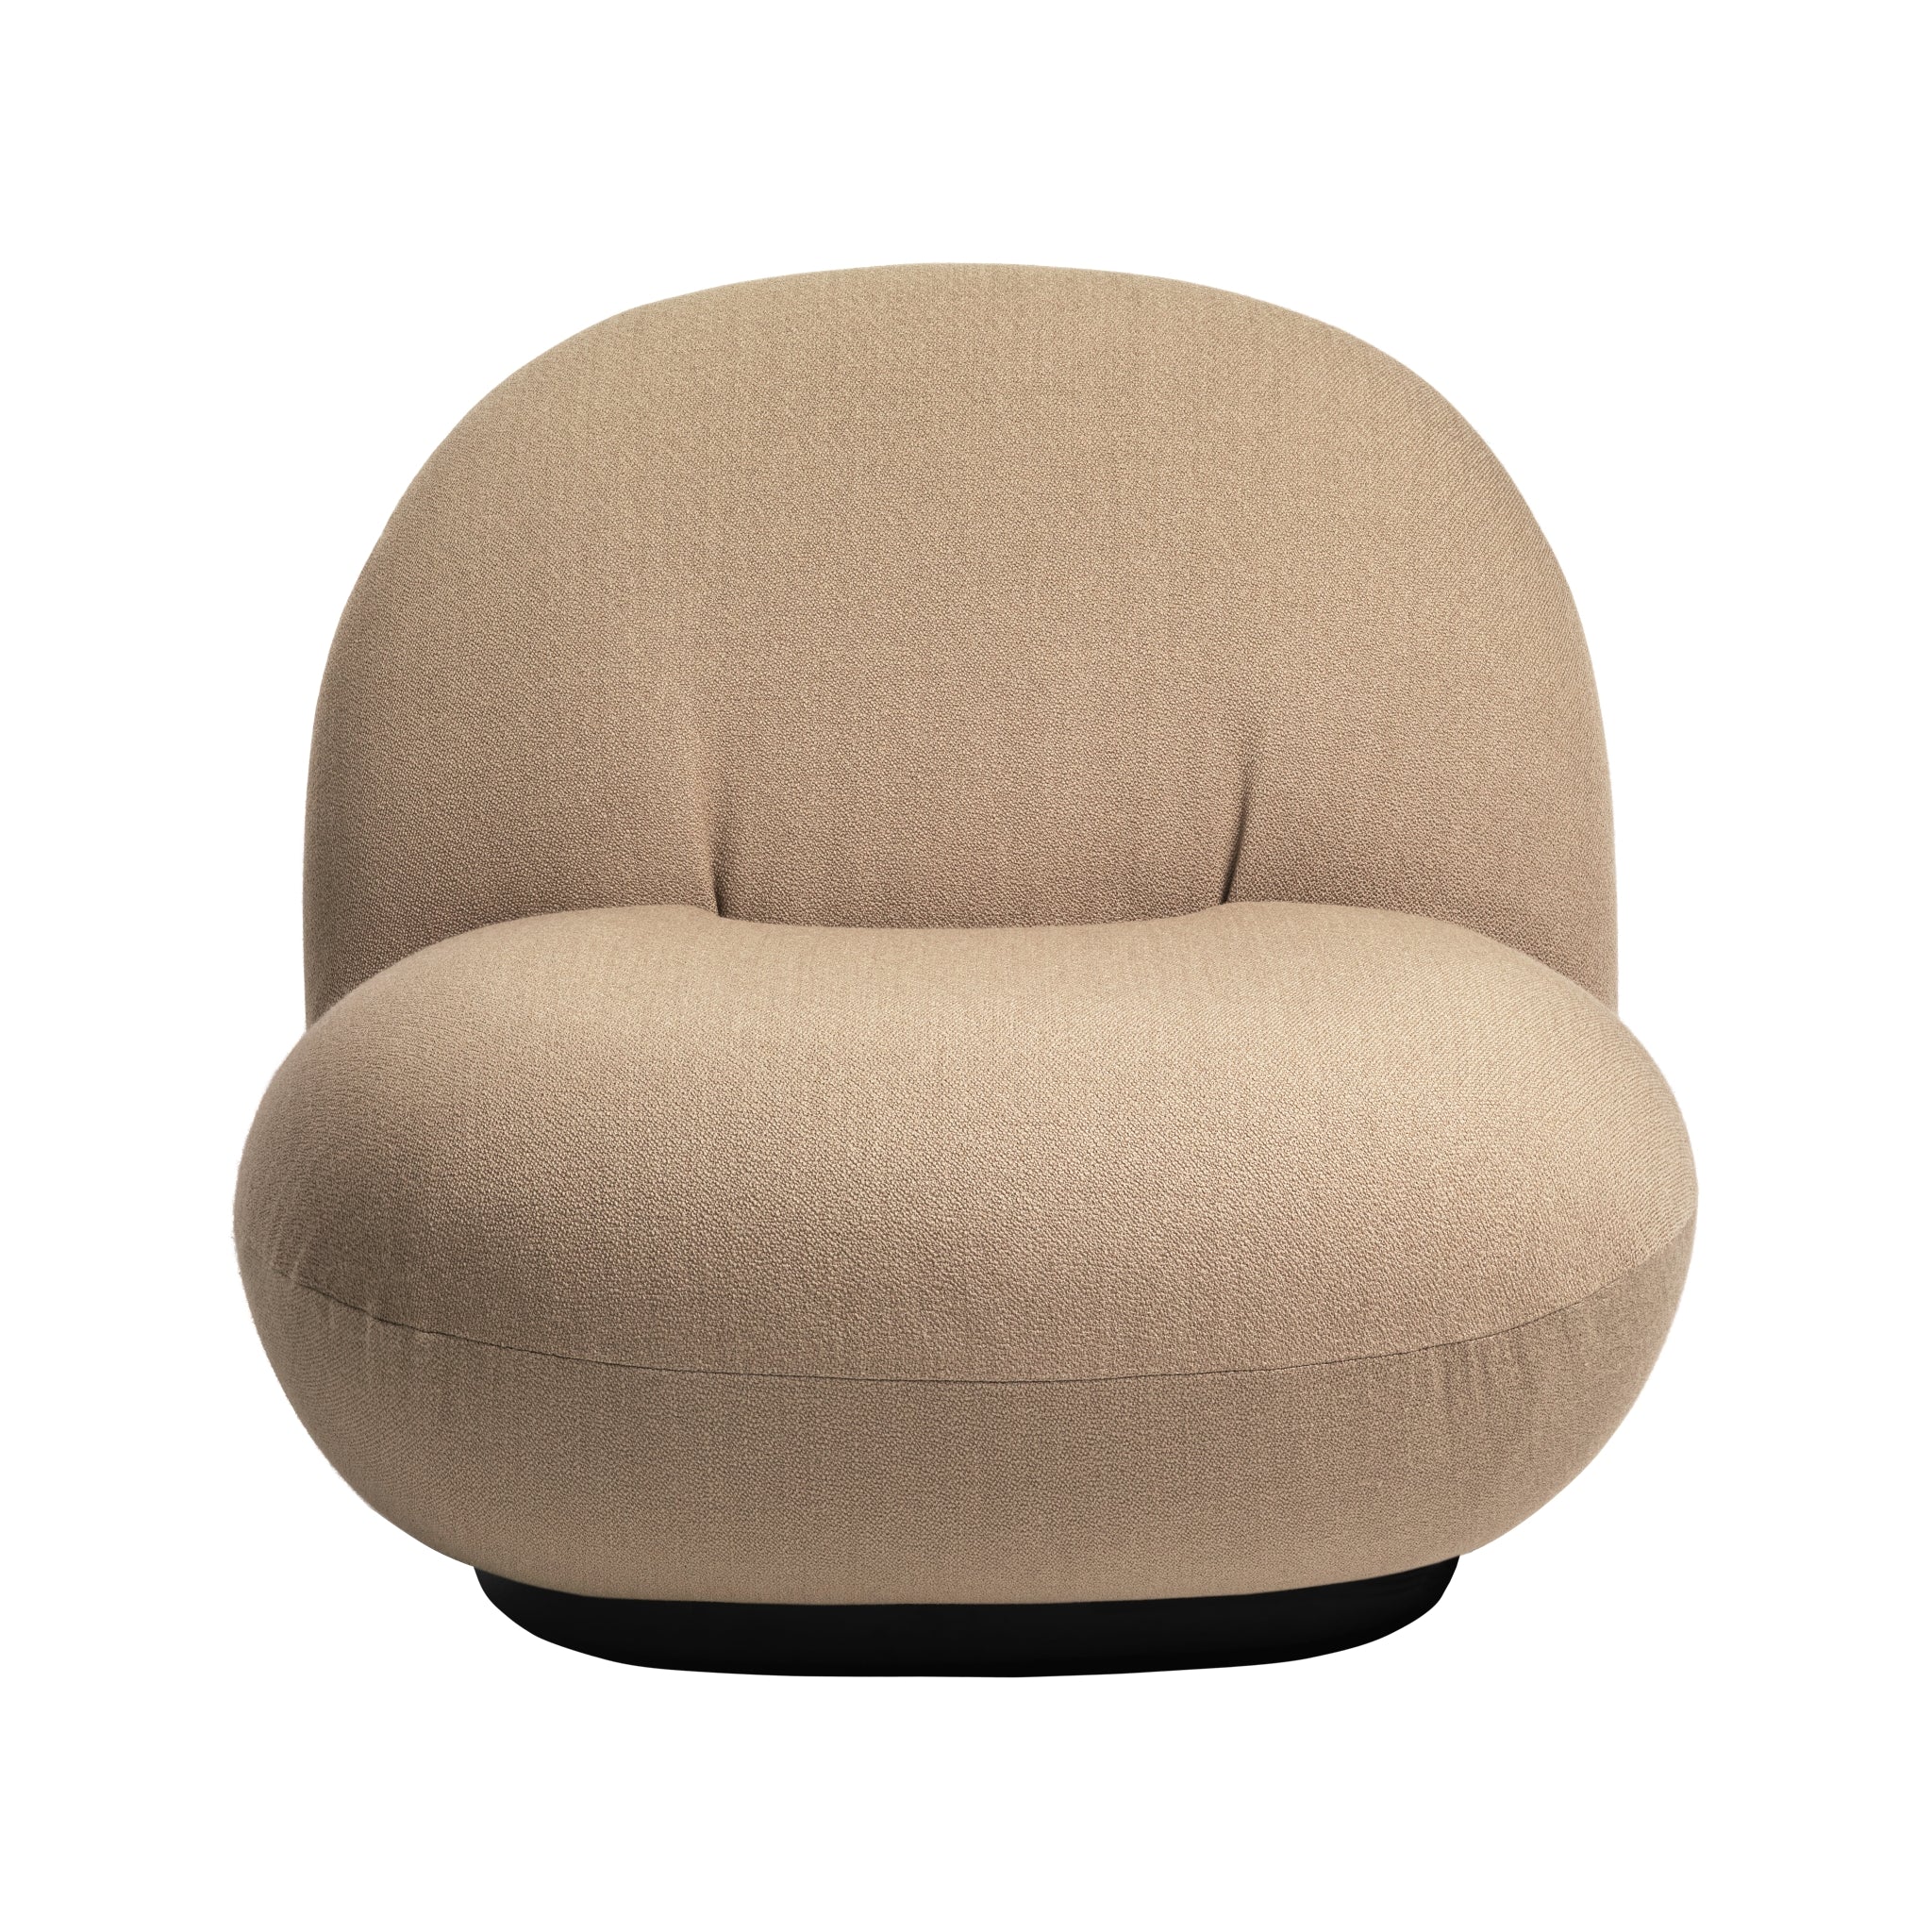 Pacha Lounge Chair Swivel Base by Gubi